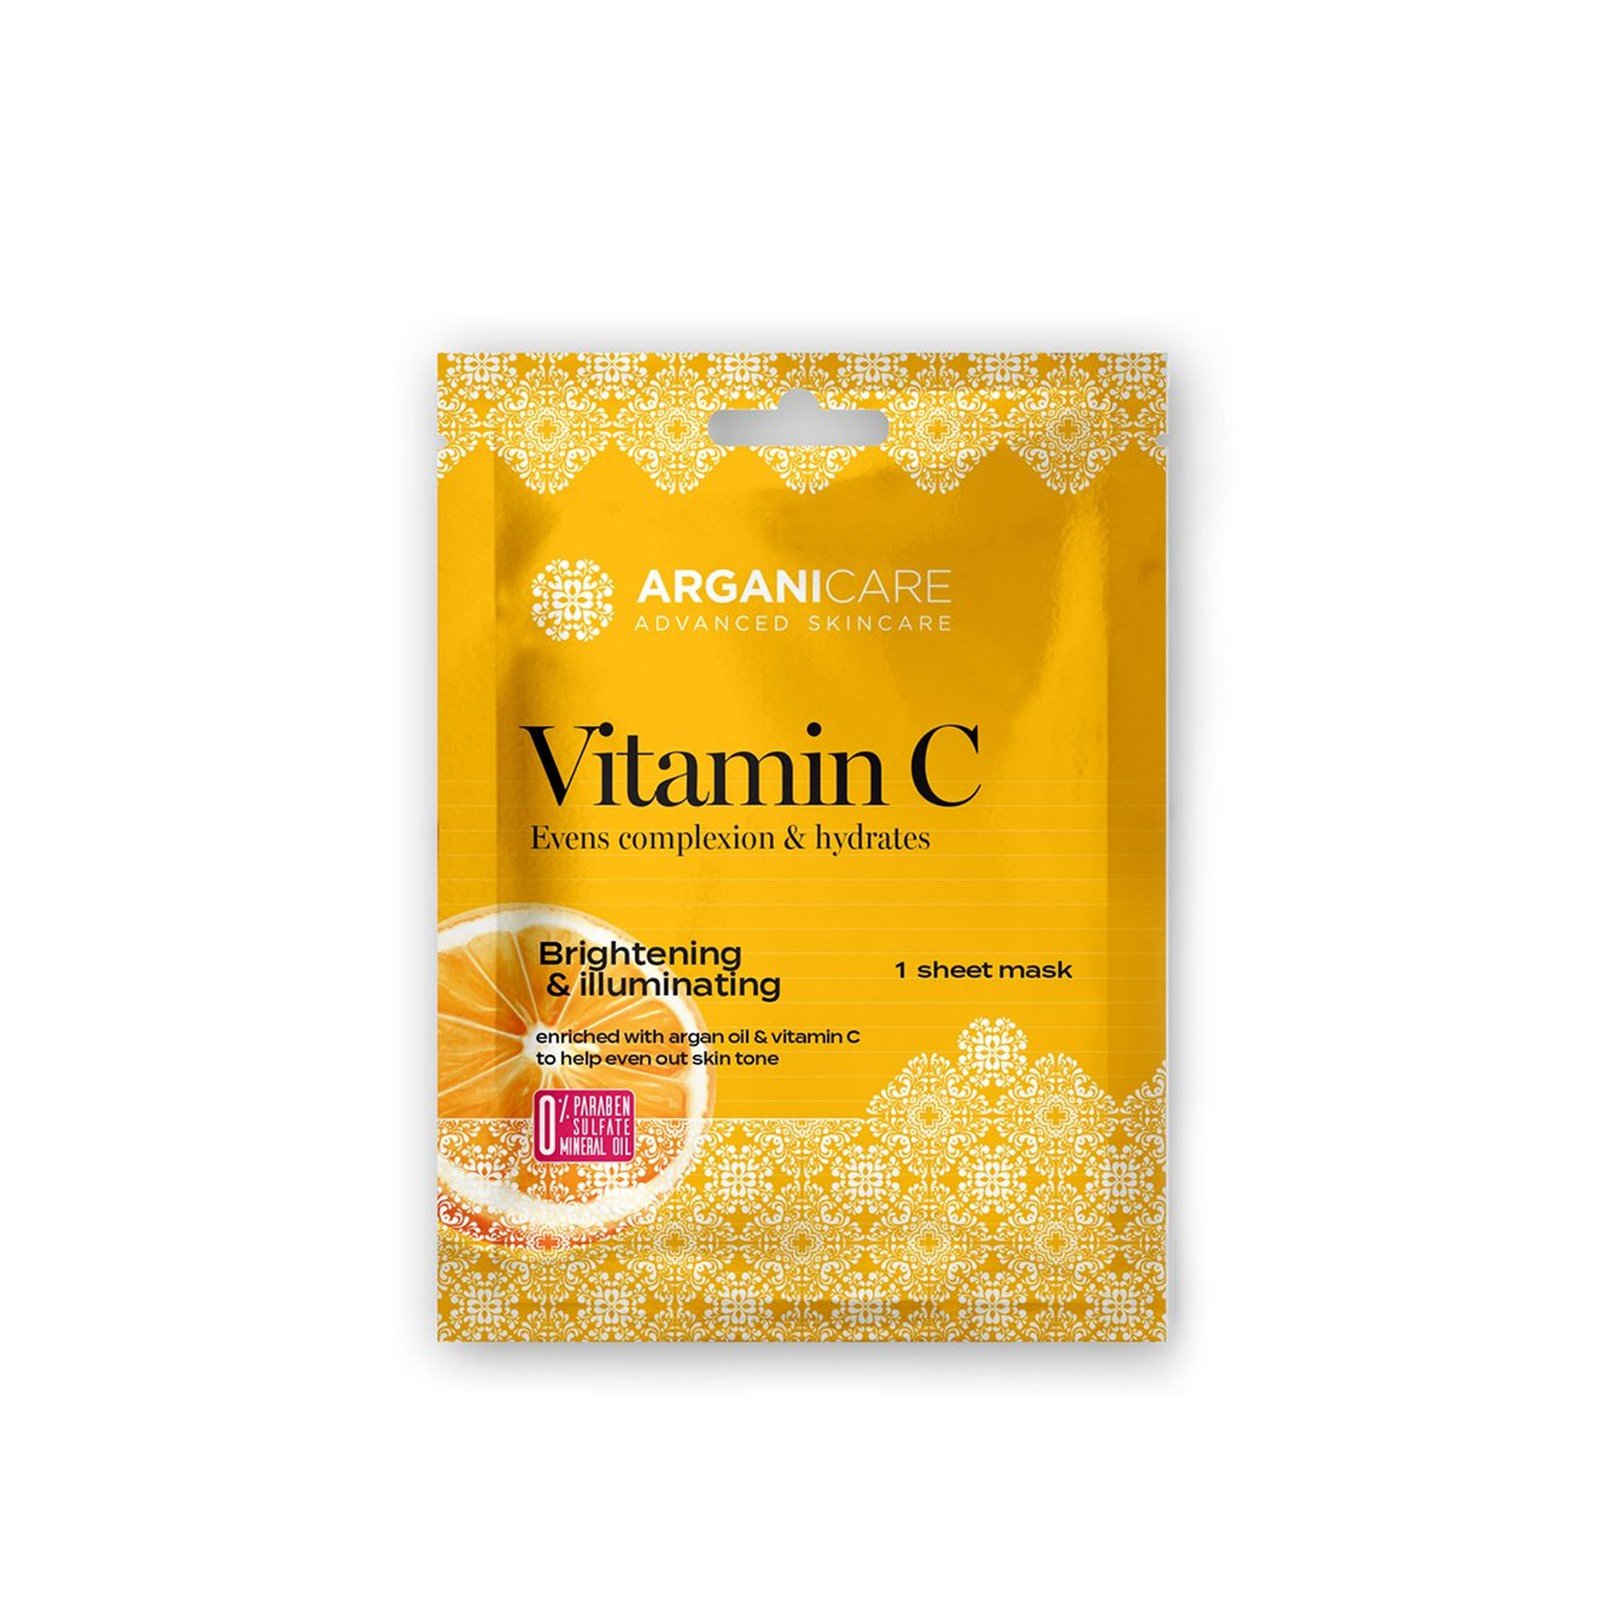 Arganicare Vitamin C Sheet Mask 17g (0.59oz)